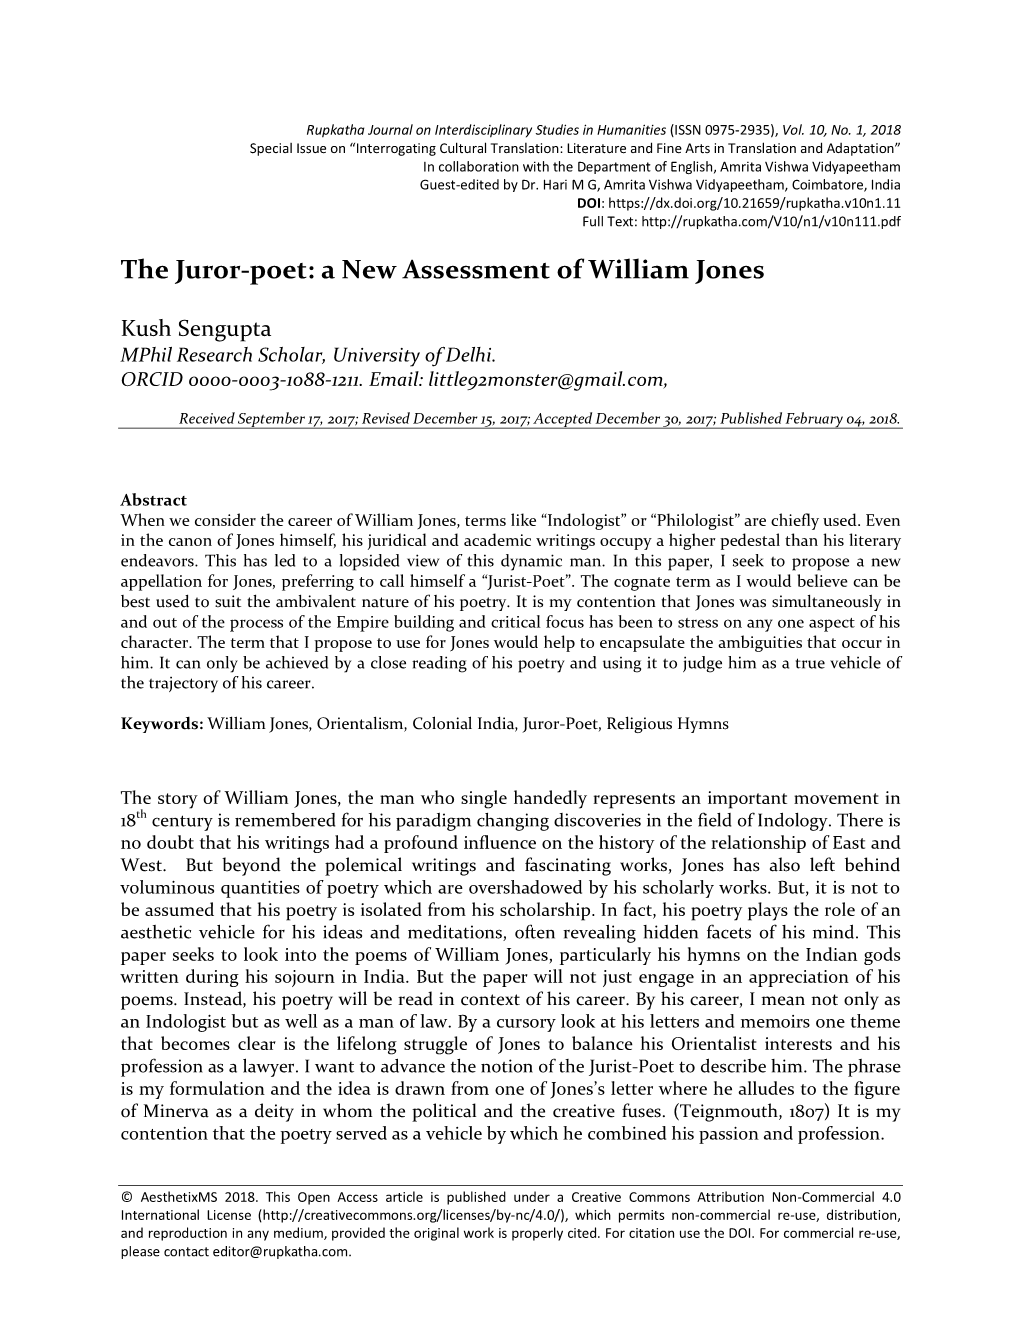 The Juror-Poet: a New Assessment of William Jones